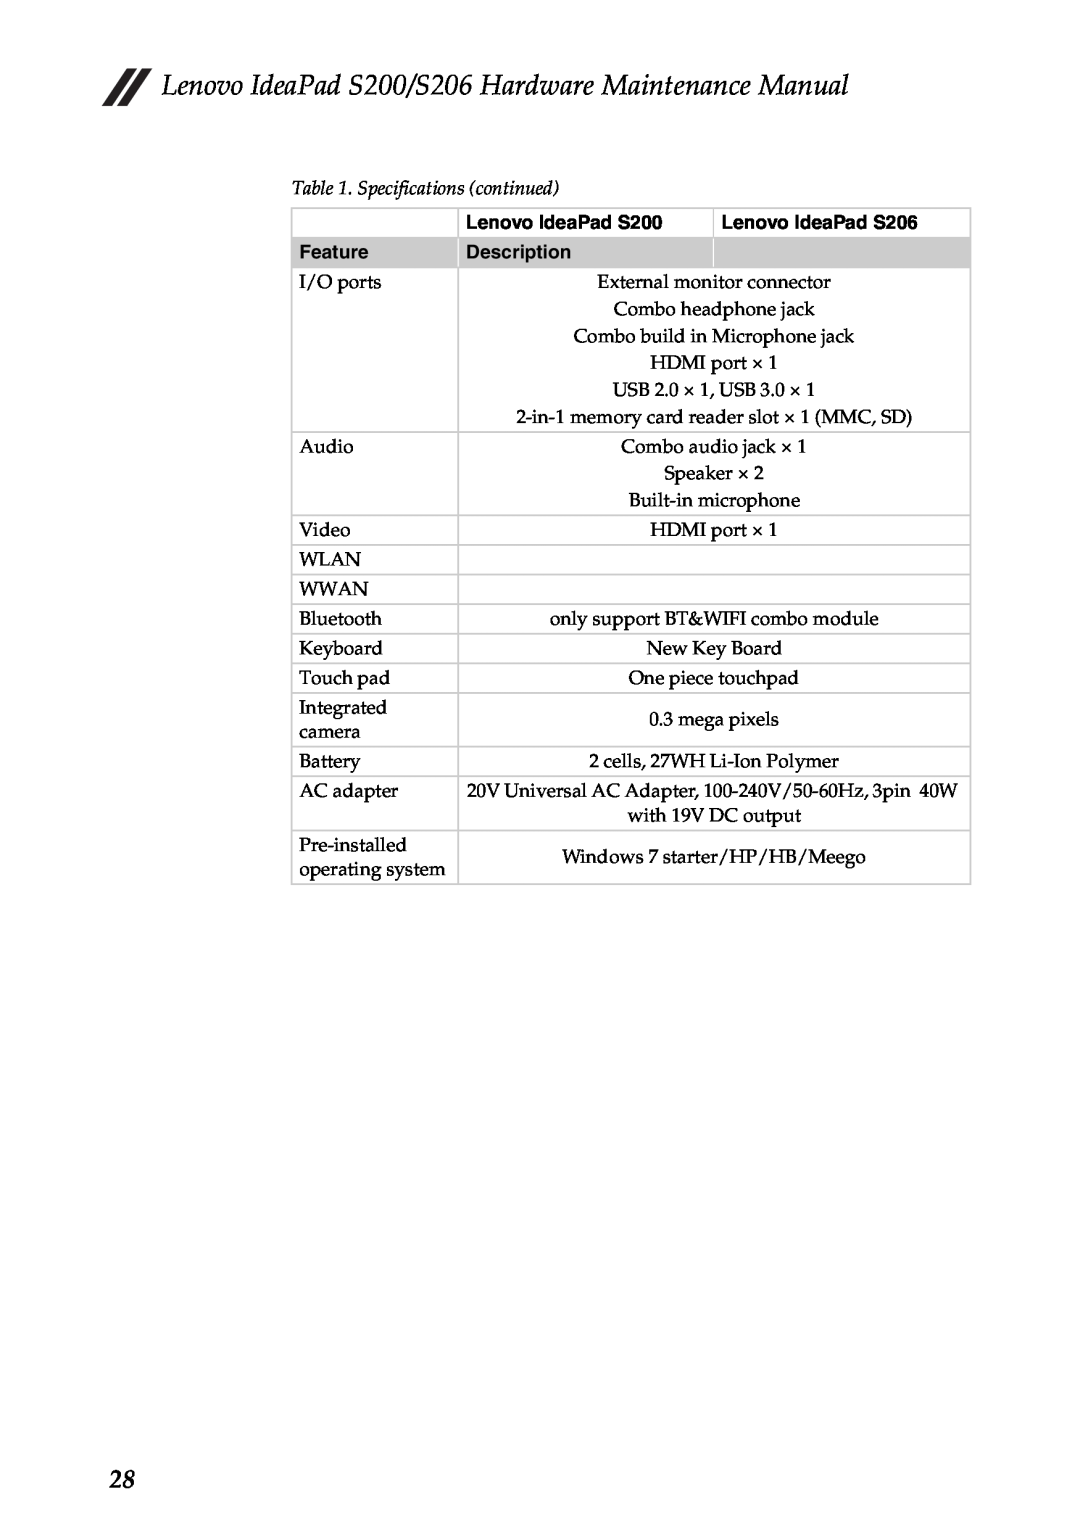 Lenovo S206, S200 manual Specifications continued, I/O ports 